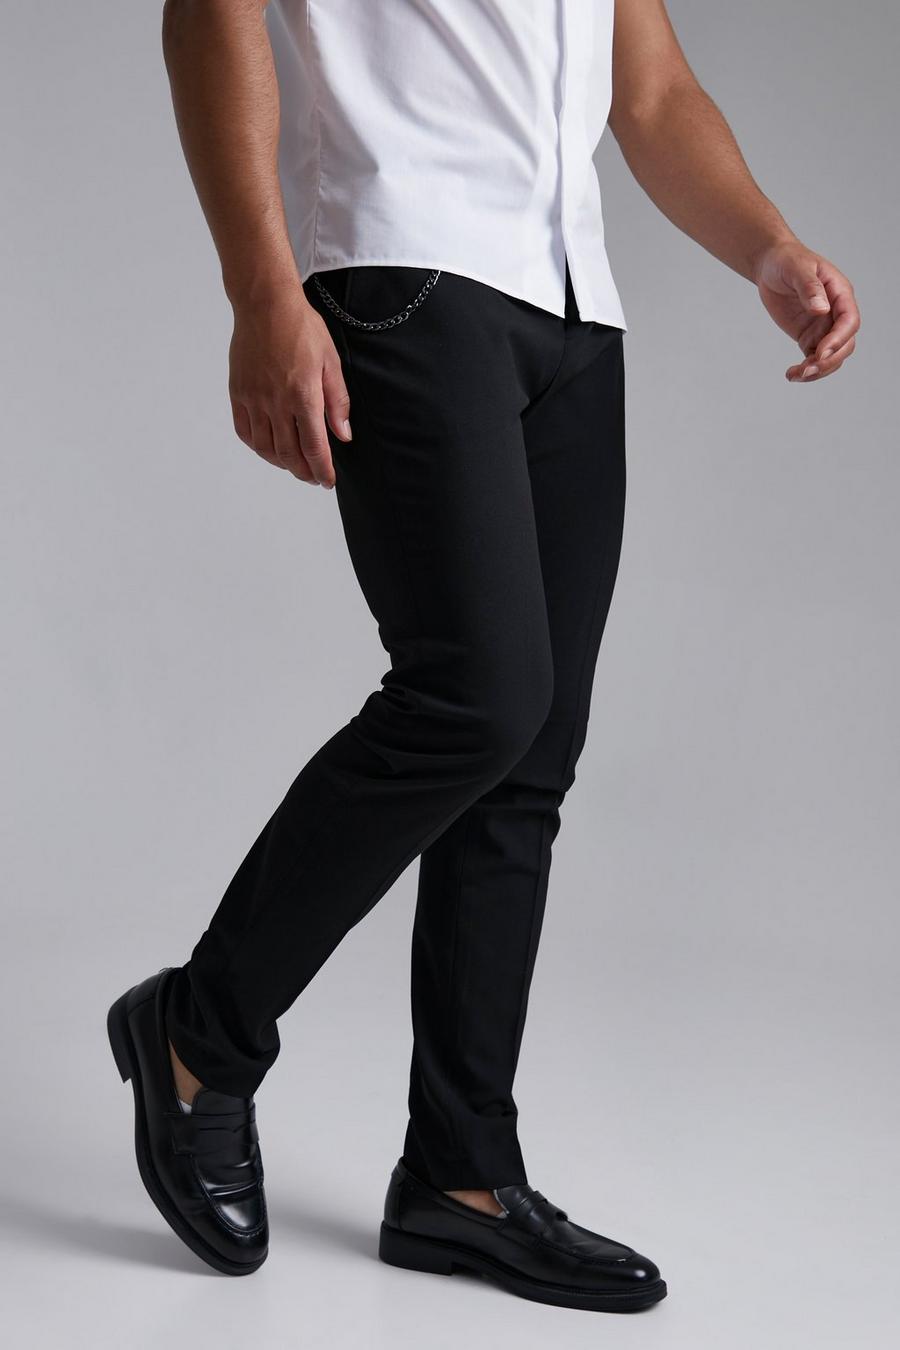 Pantaloni Smart Tall in tinta unita Skinny Fit con catena, Black nero